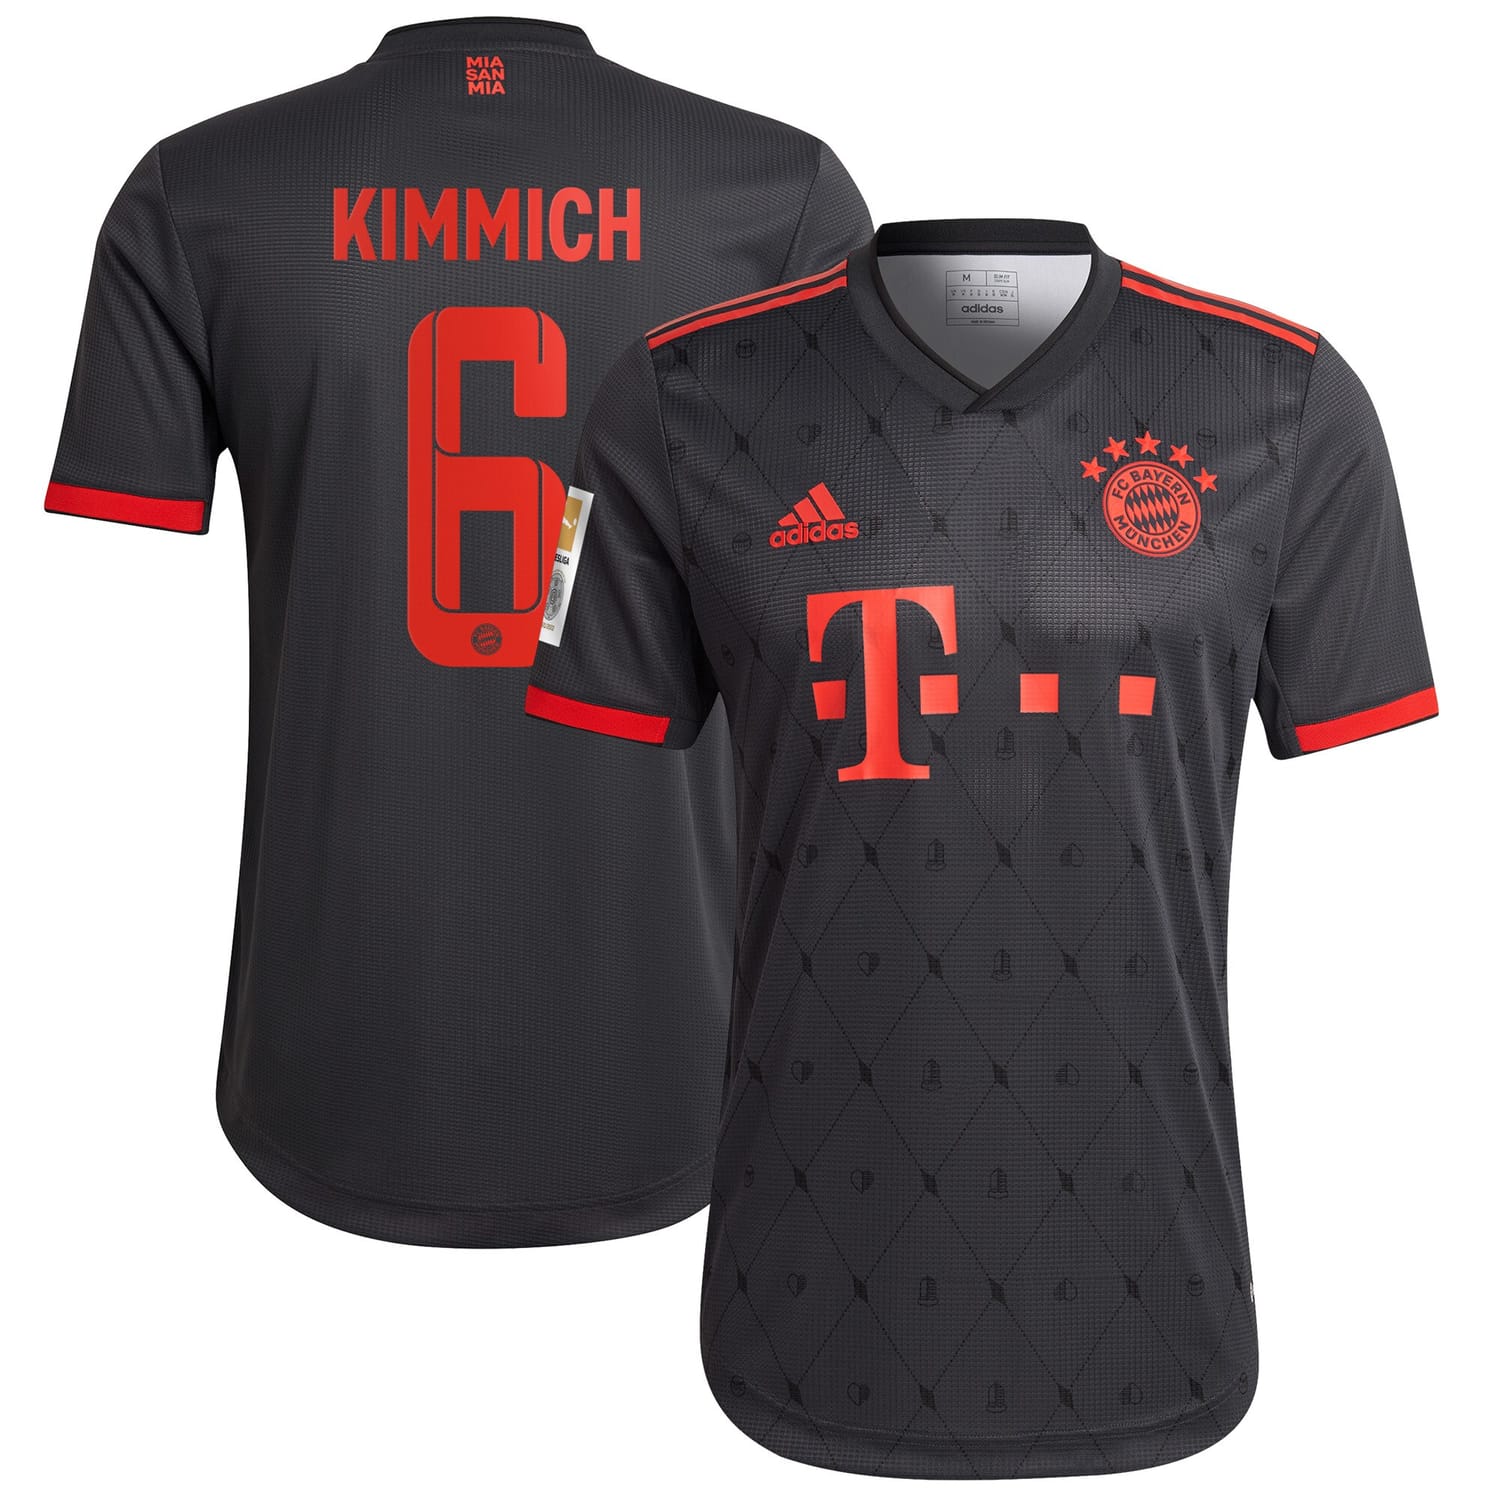 Bundesliga Bayern Munich Third Authentic Jersey Shirt Charcoal 2022-23 player Joshua Kimmich printing for Men